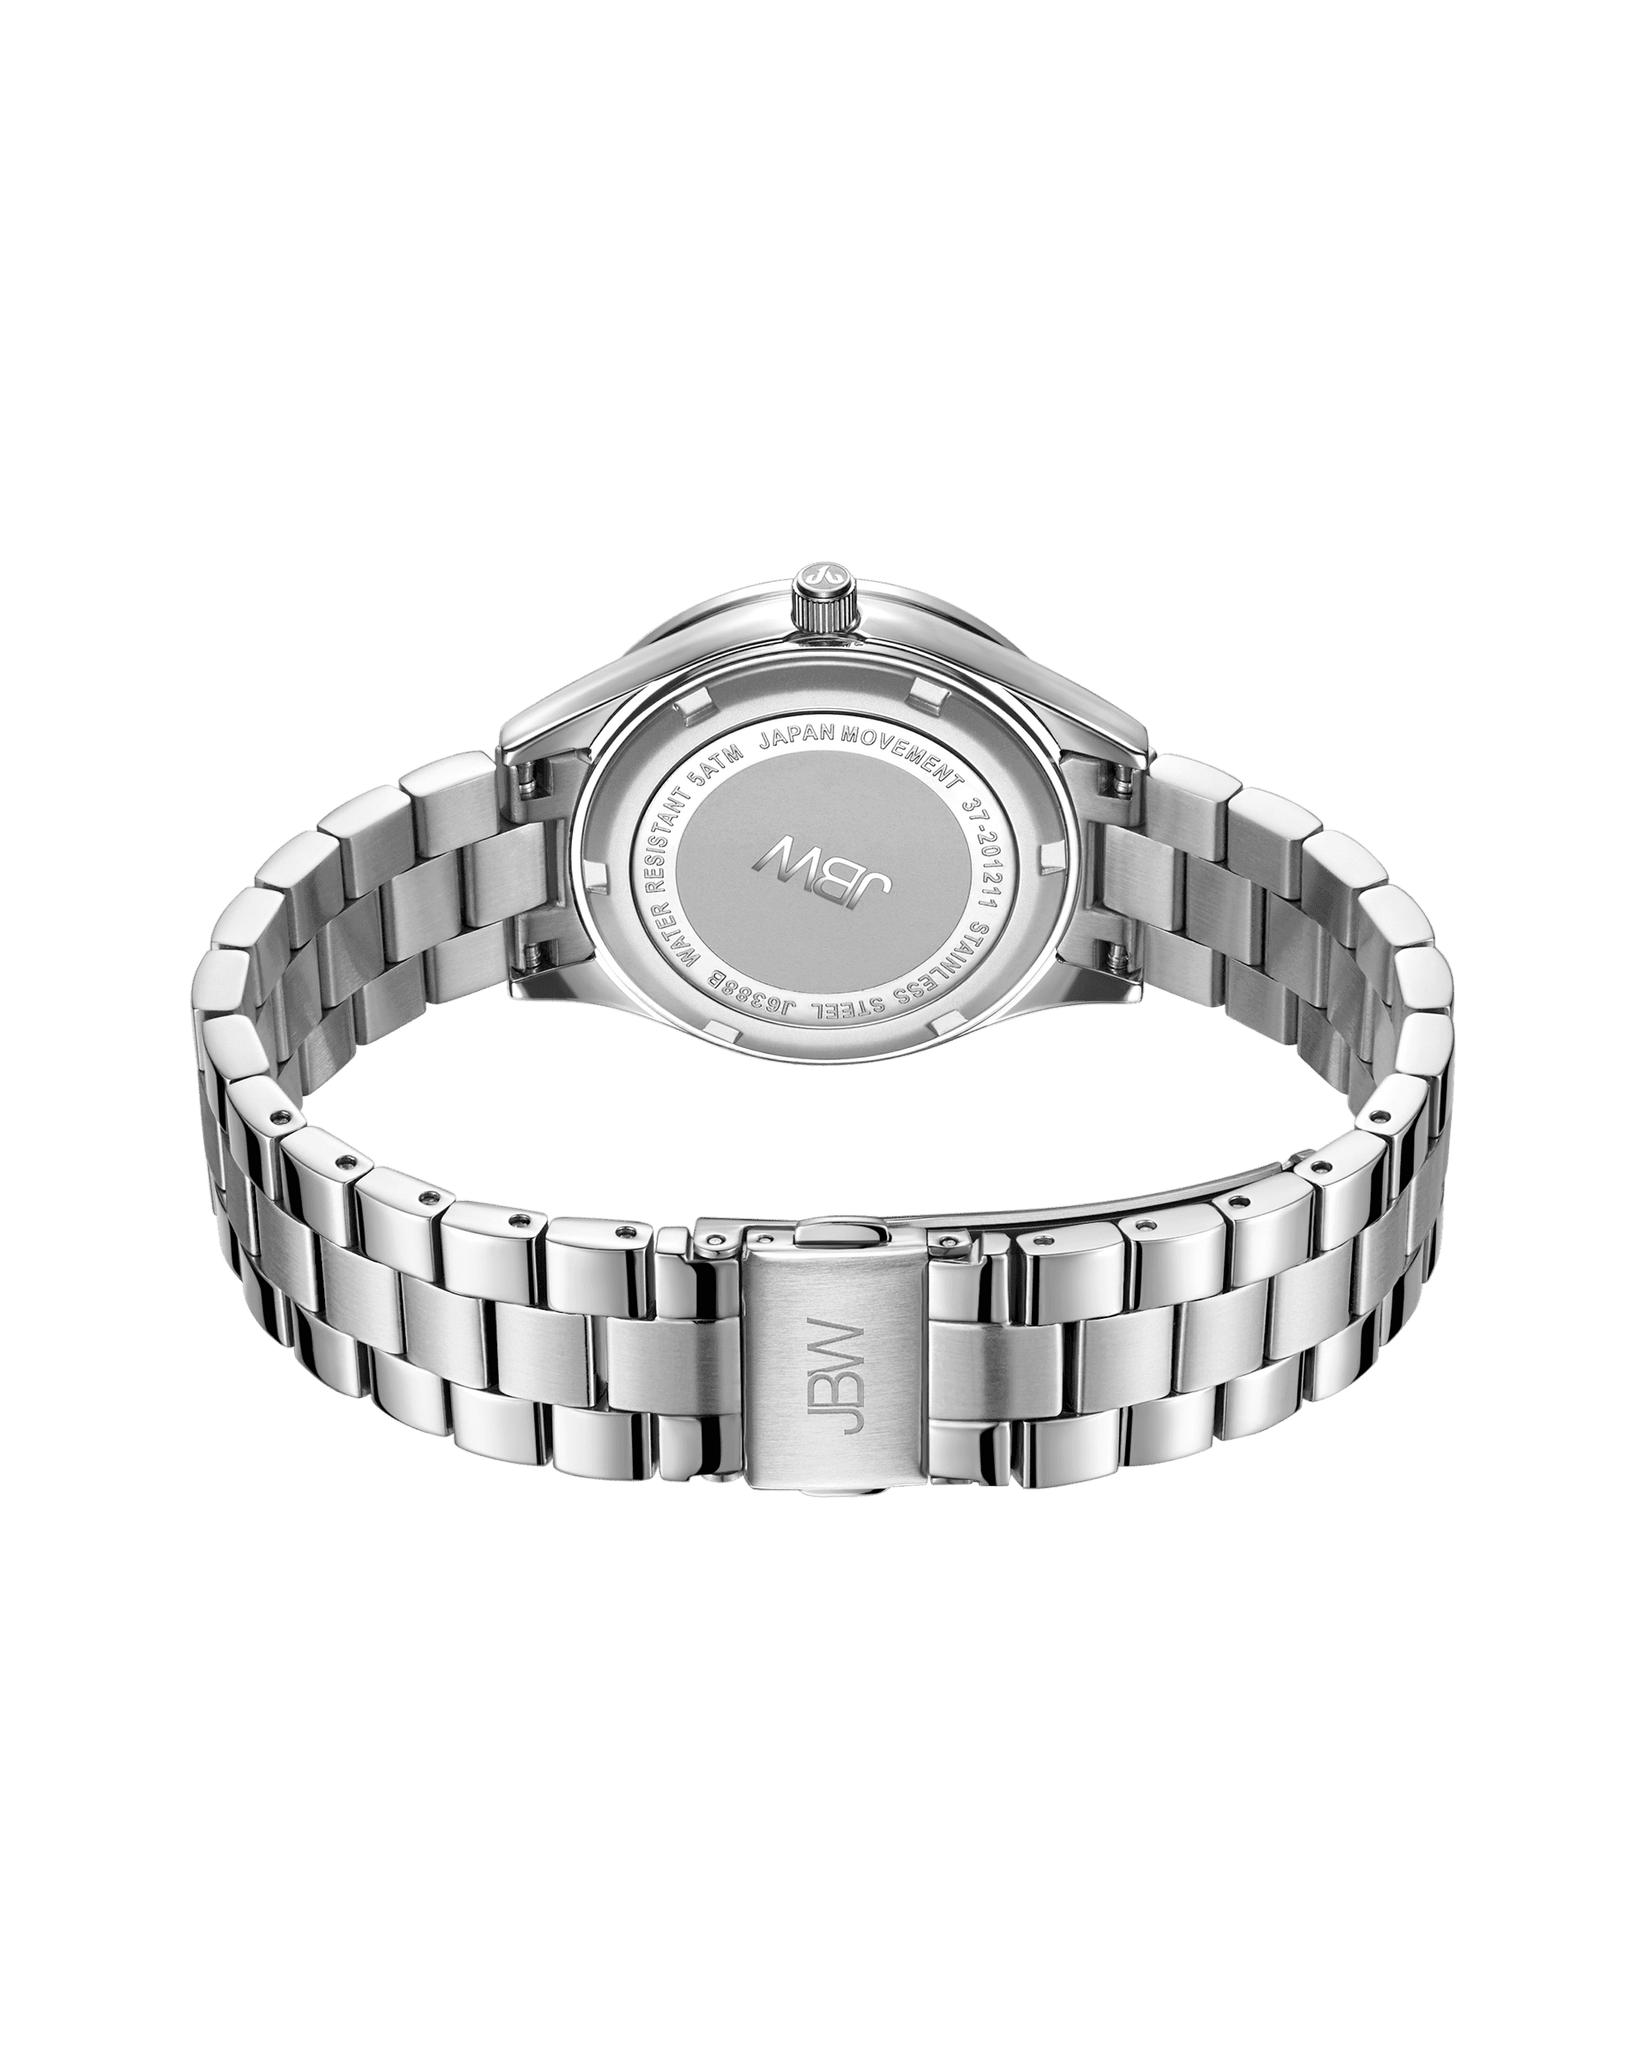 Mondrian 34 | J6388B – JBW Watches